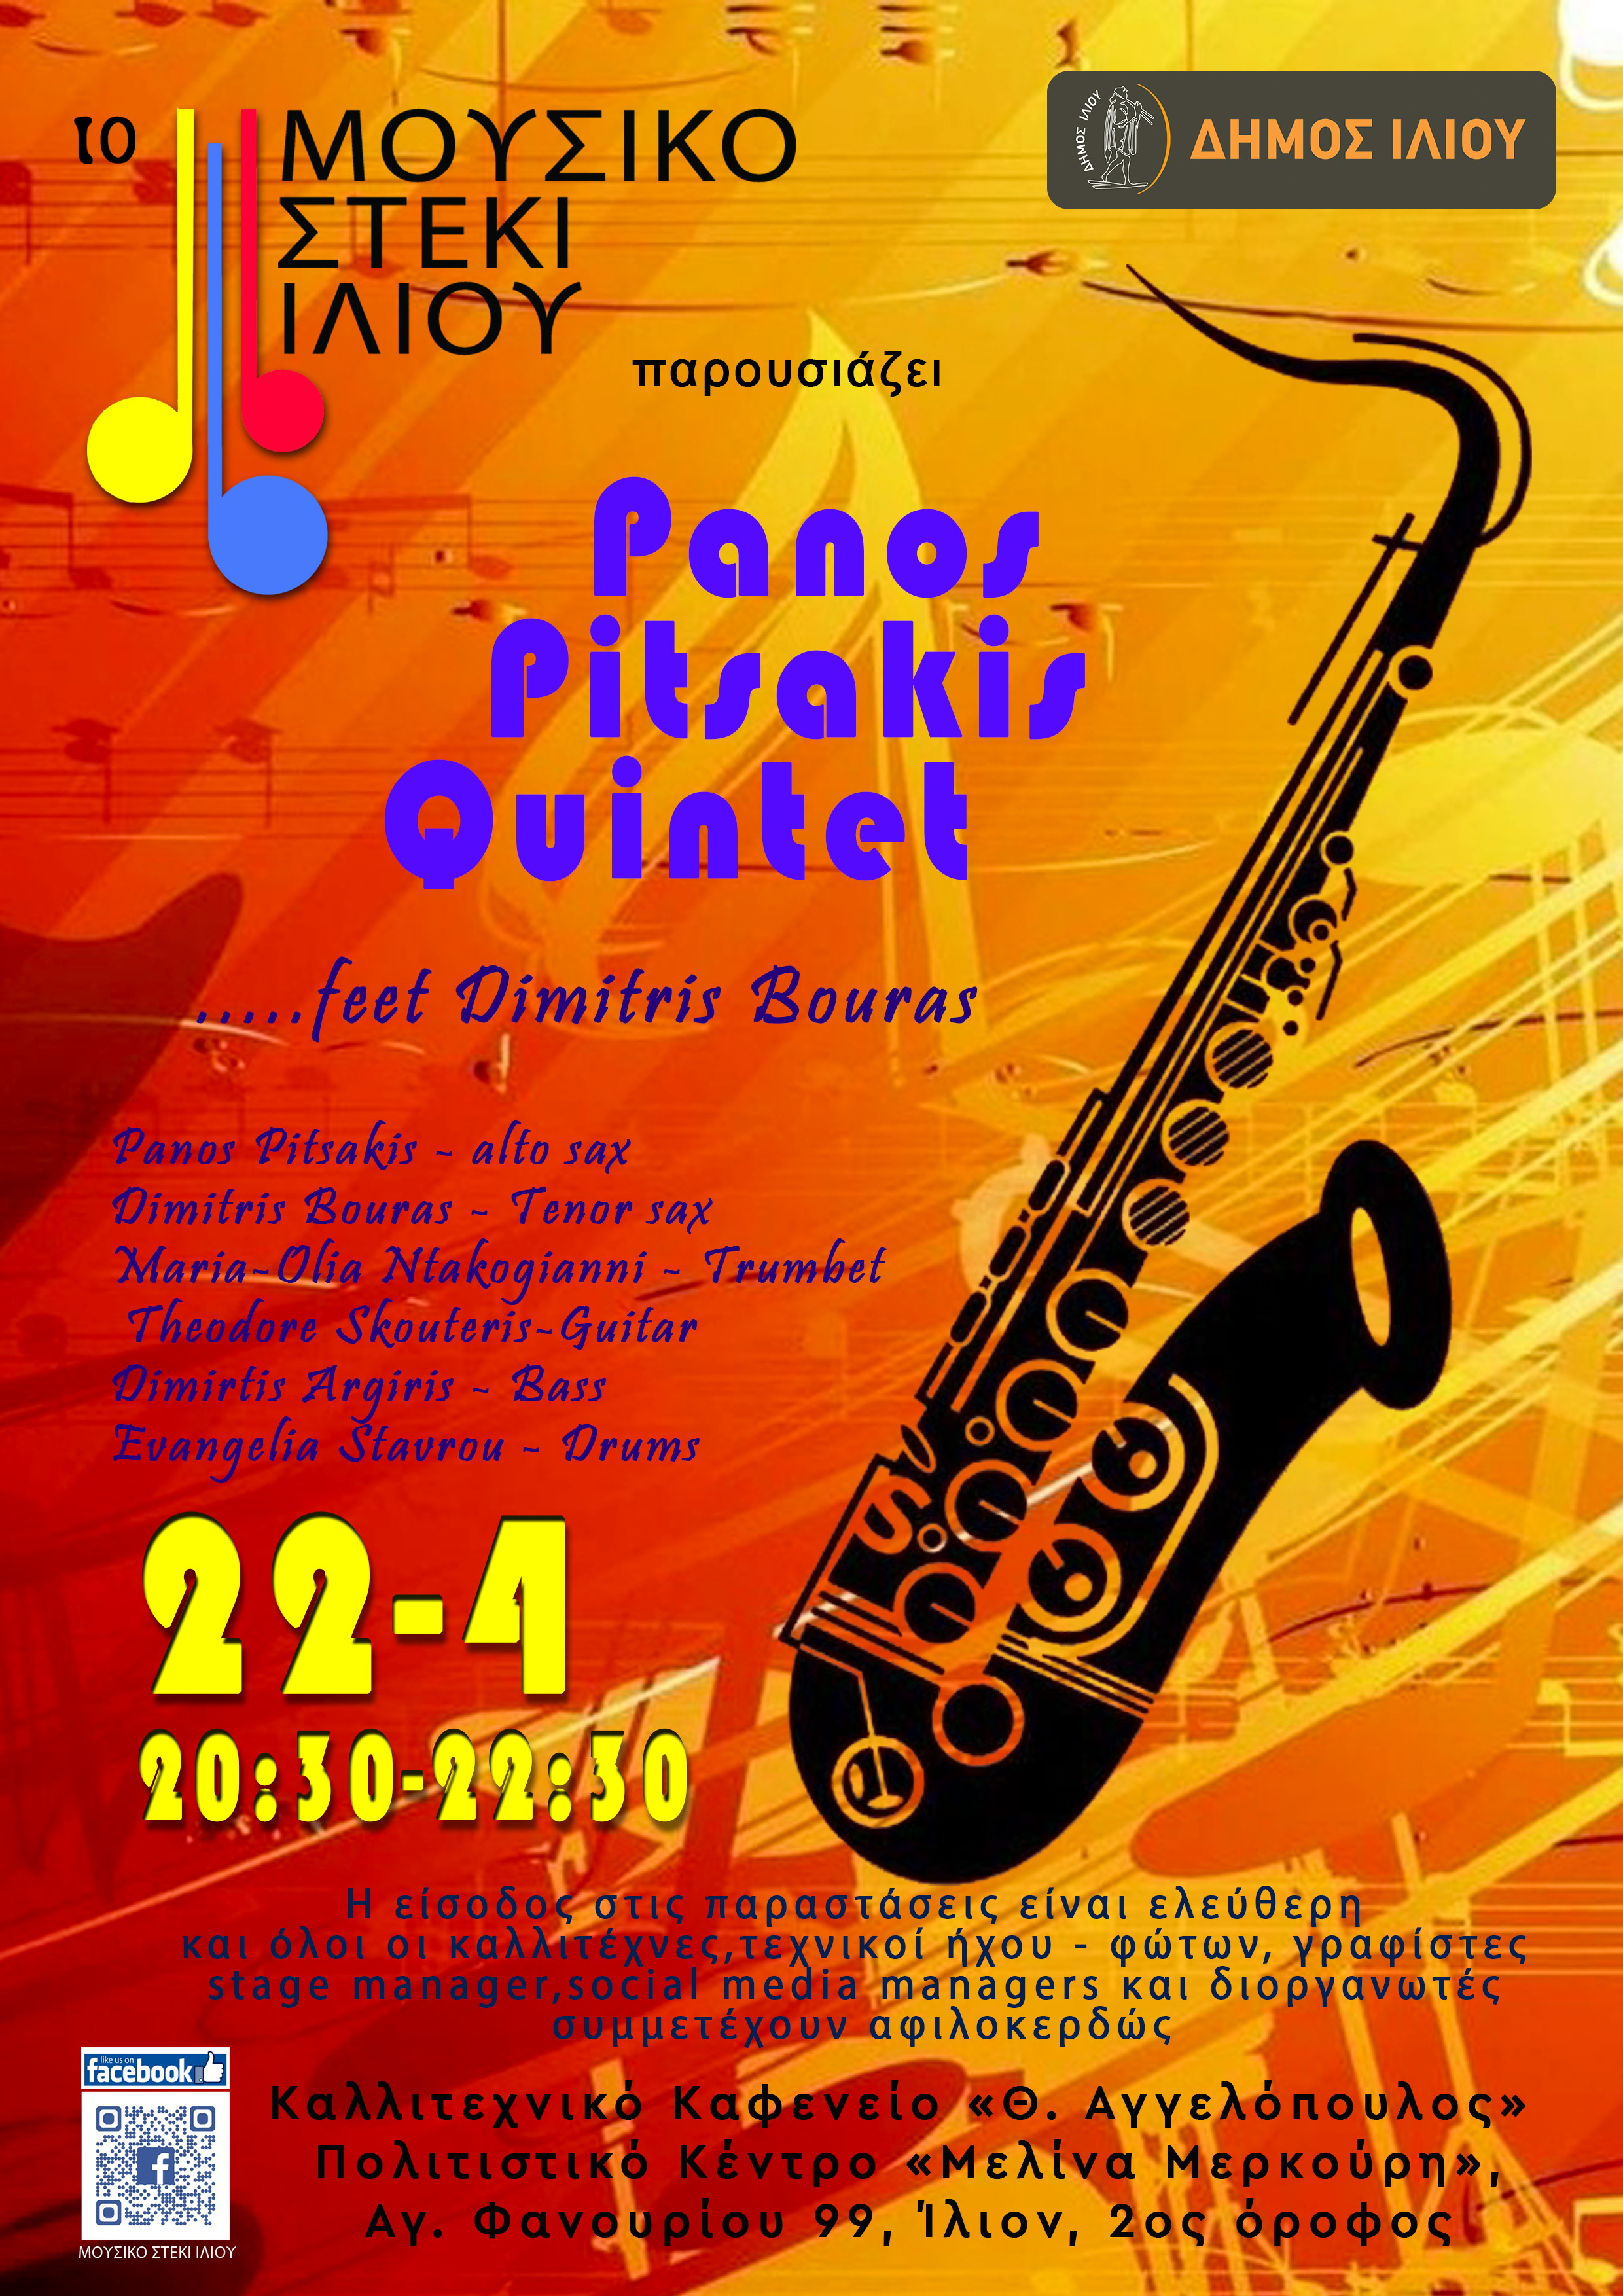 Panos Pitsakis Quintet feet Dimitris Bouras @ Μουσικό Στέκι Ιλίου